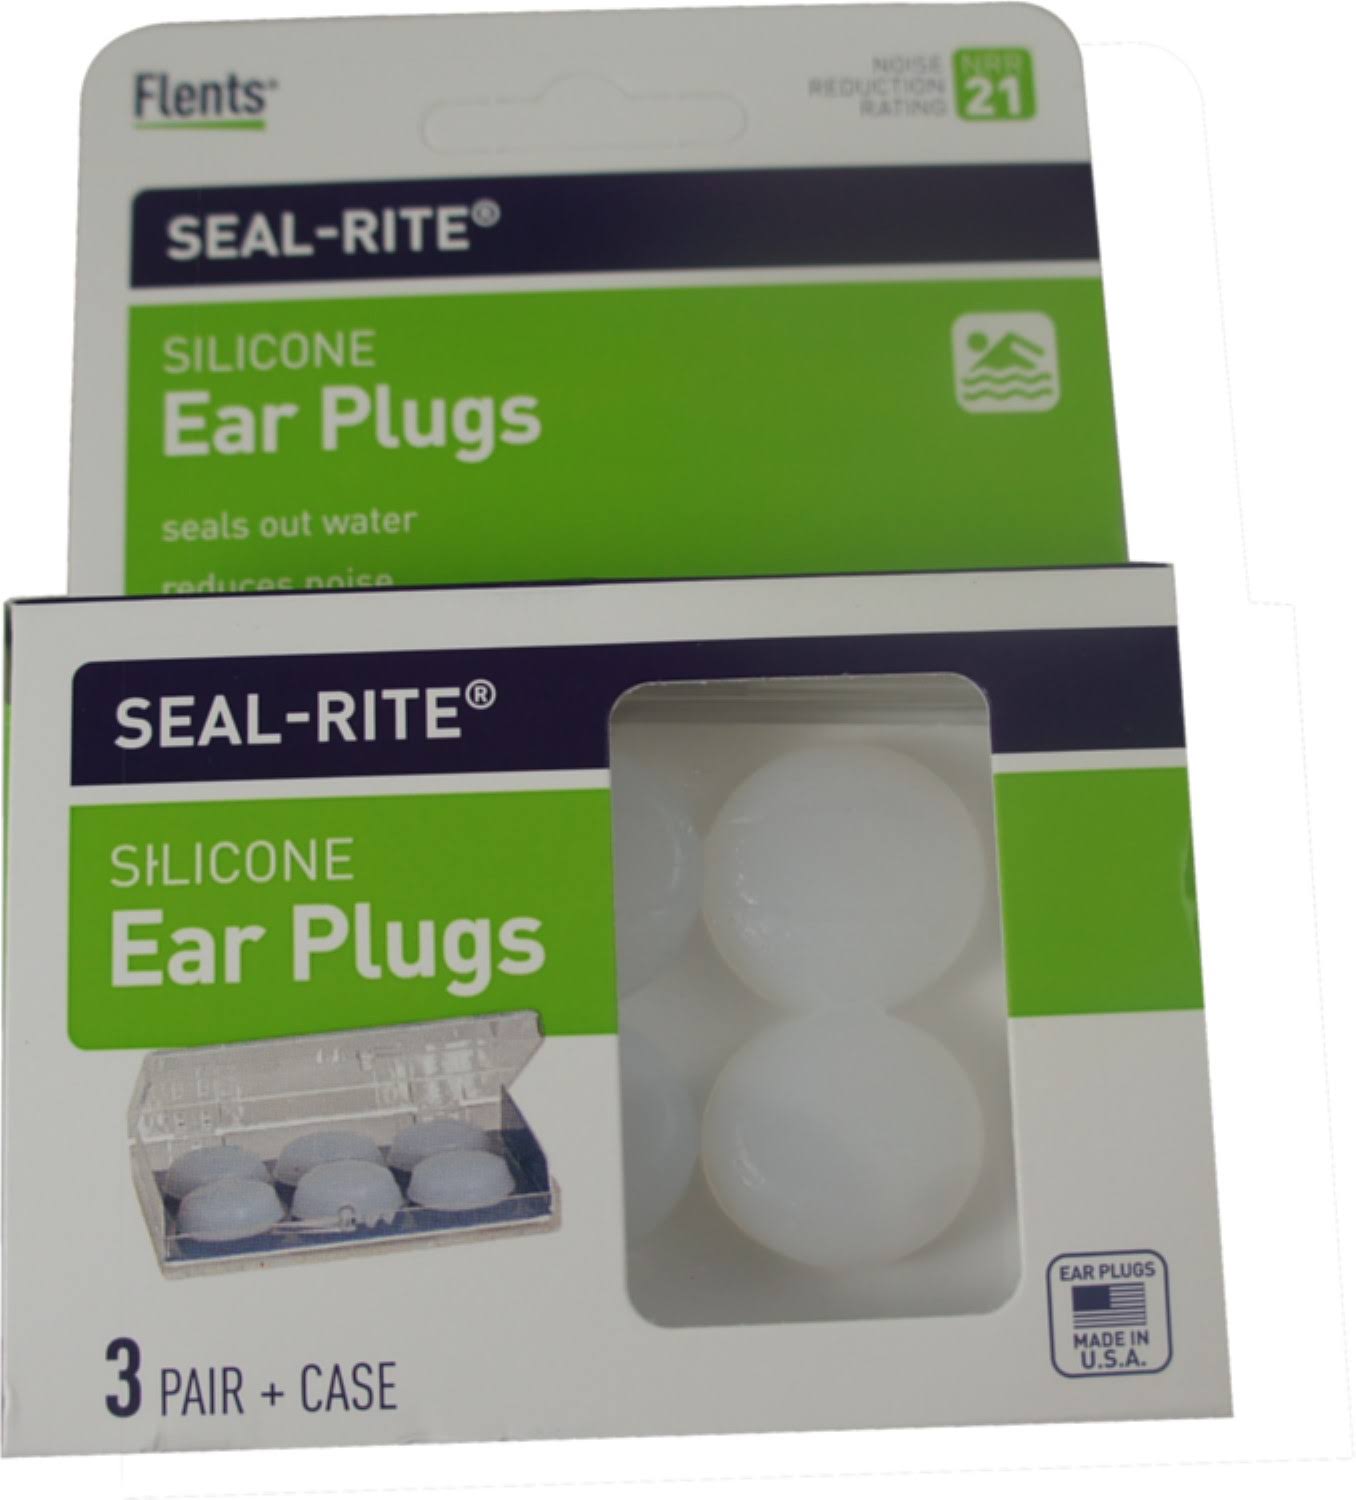 Flents Seal-Rite Ear Plugs - 3 Pairs